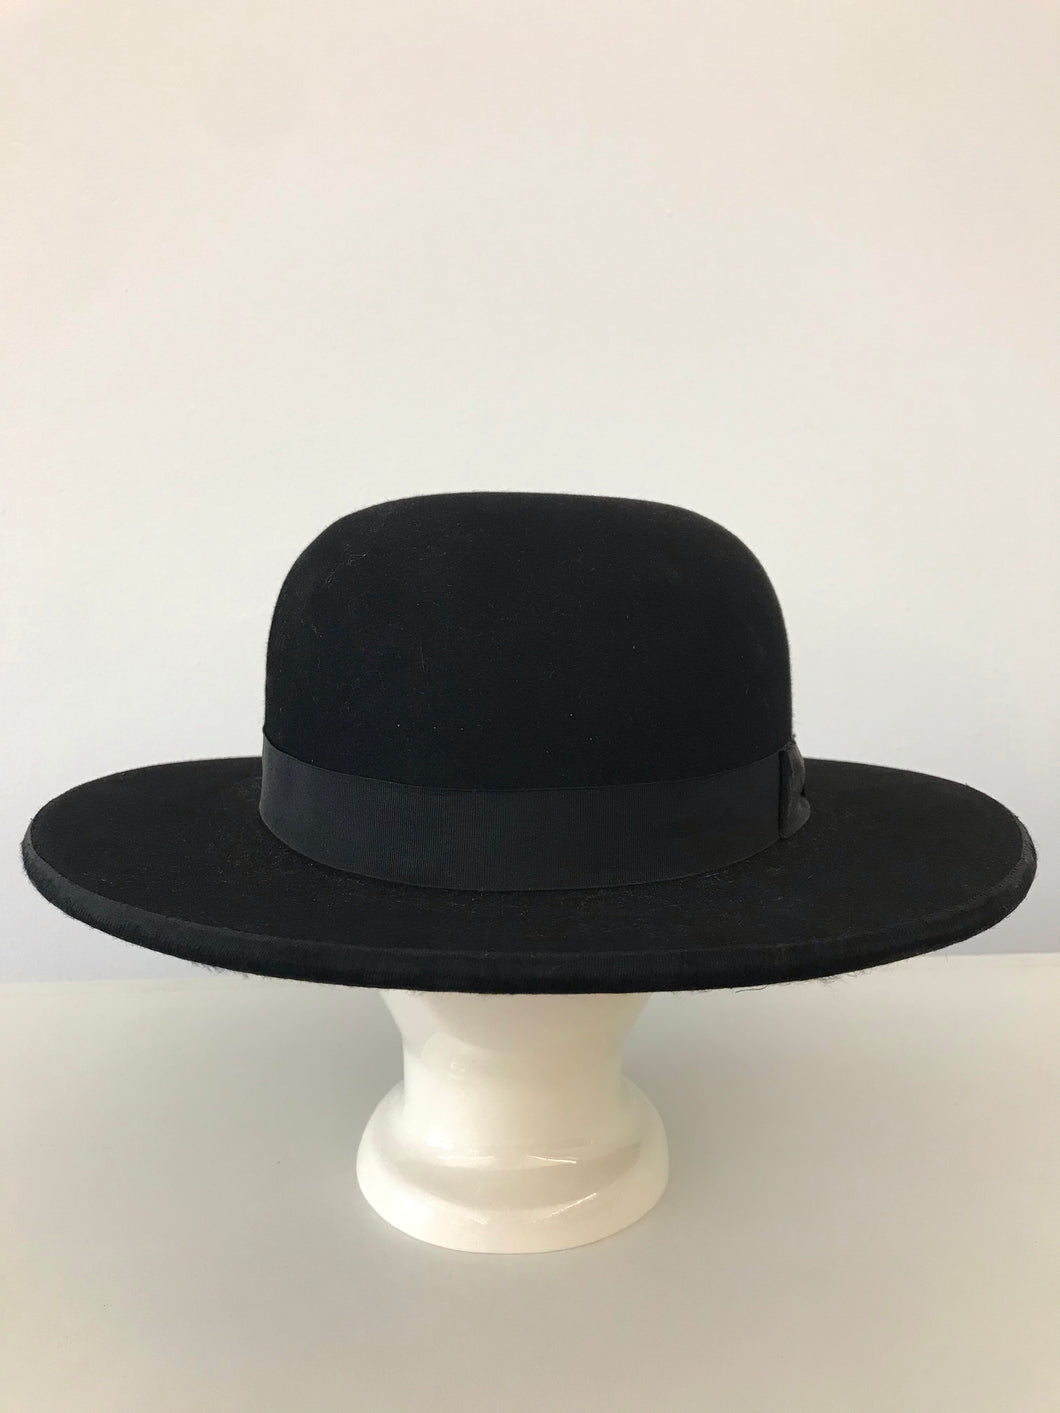 Antique Black Wool Felt Clergyman Style Hat By Scott & Co.